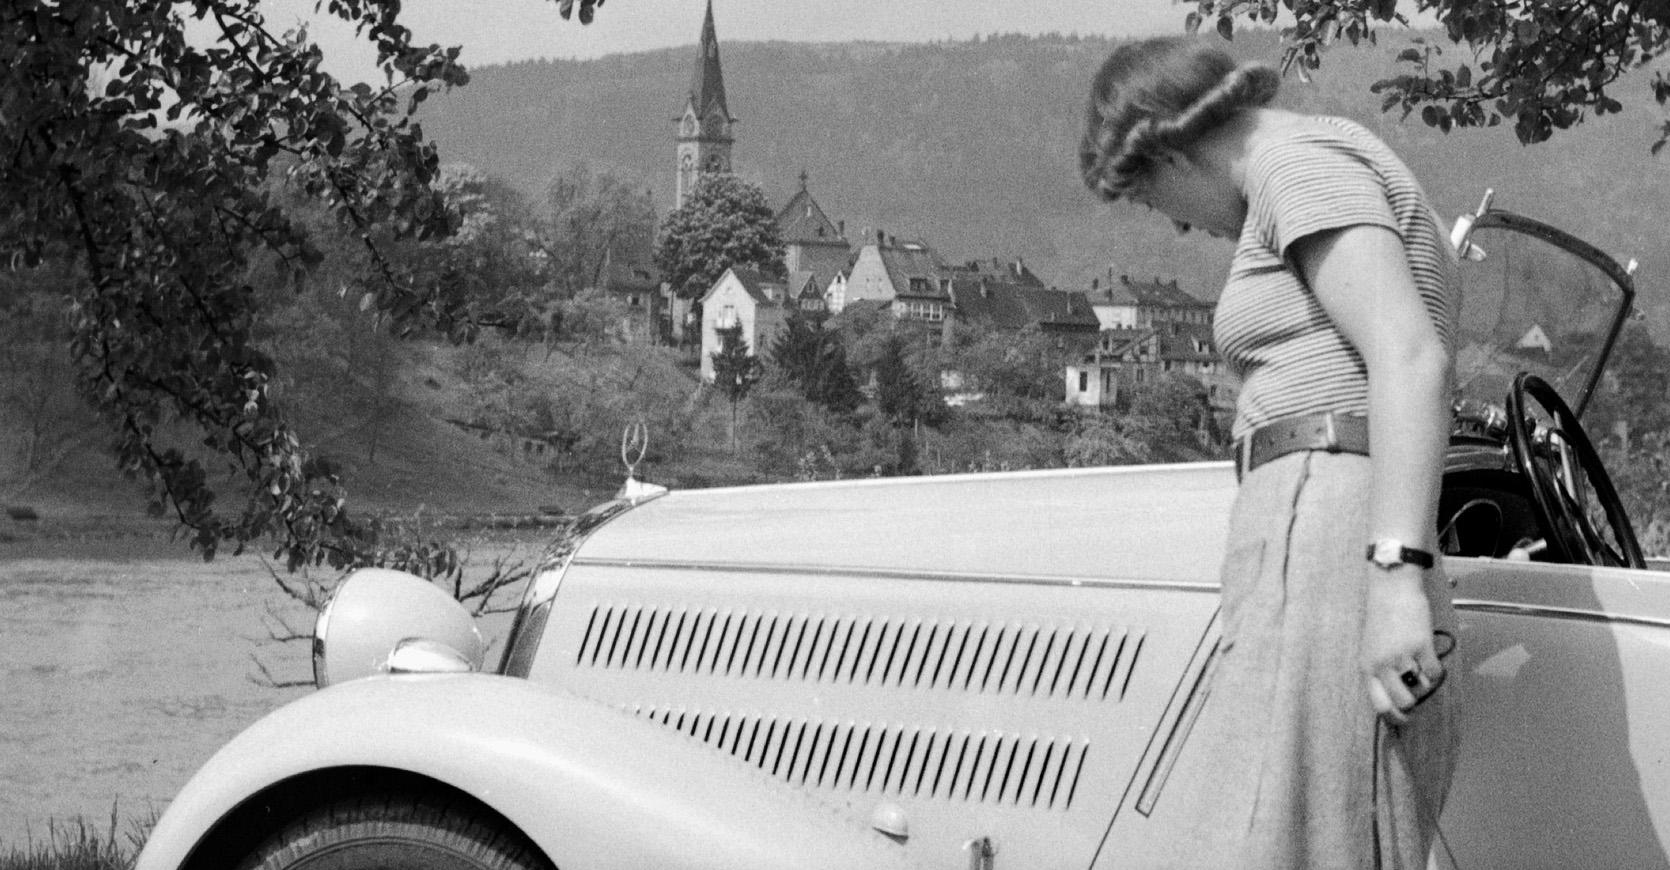 To Neckargemuend Mercedes Benz car near Heidelberg, Germany 1936, Printed Later  - Photograph by Karl Heinrich Lämmel